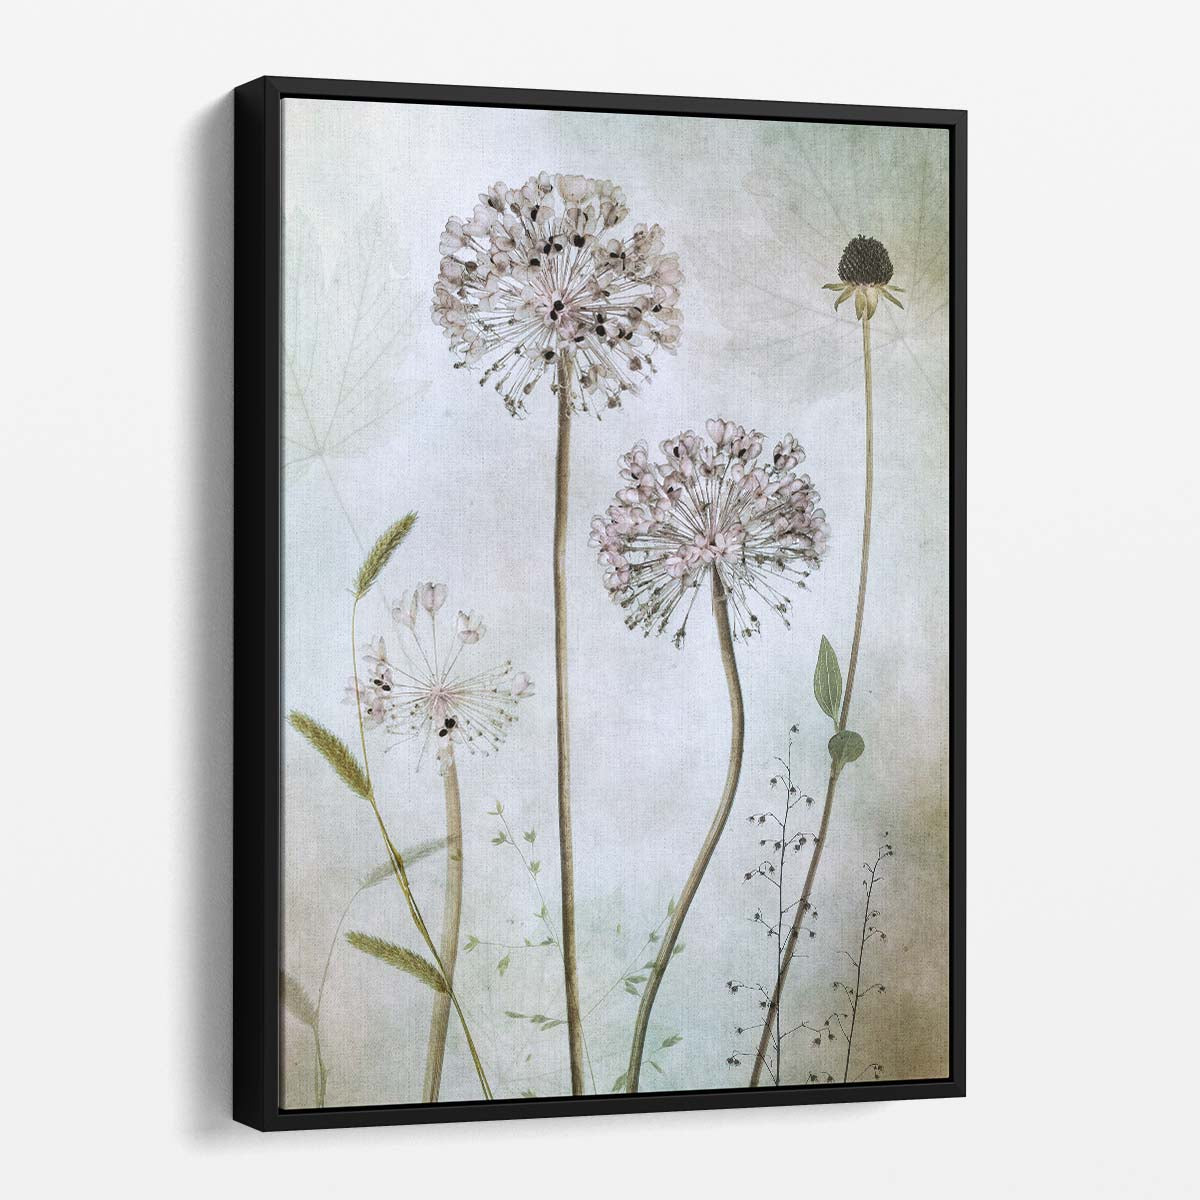 Allium Flower Macro Photography Textured Botanical Still Life Art by Luxuriance Designs, made in USA